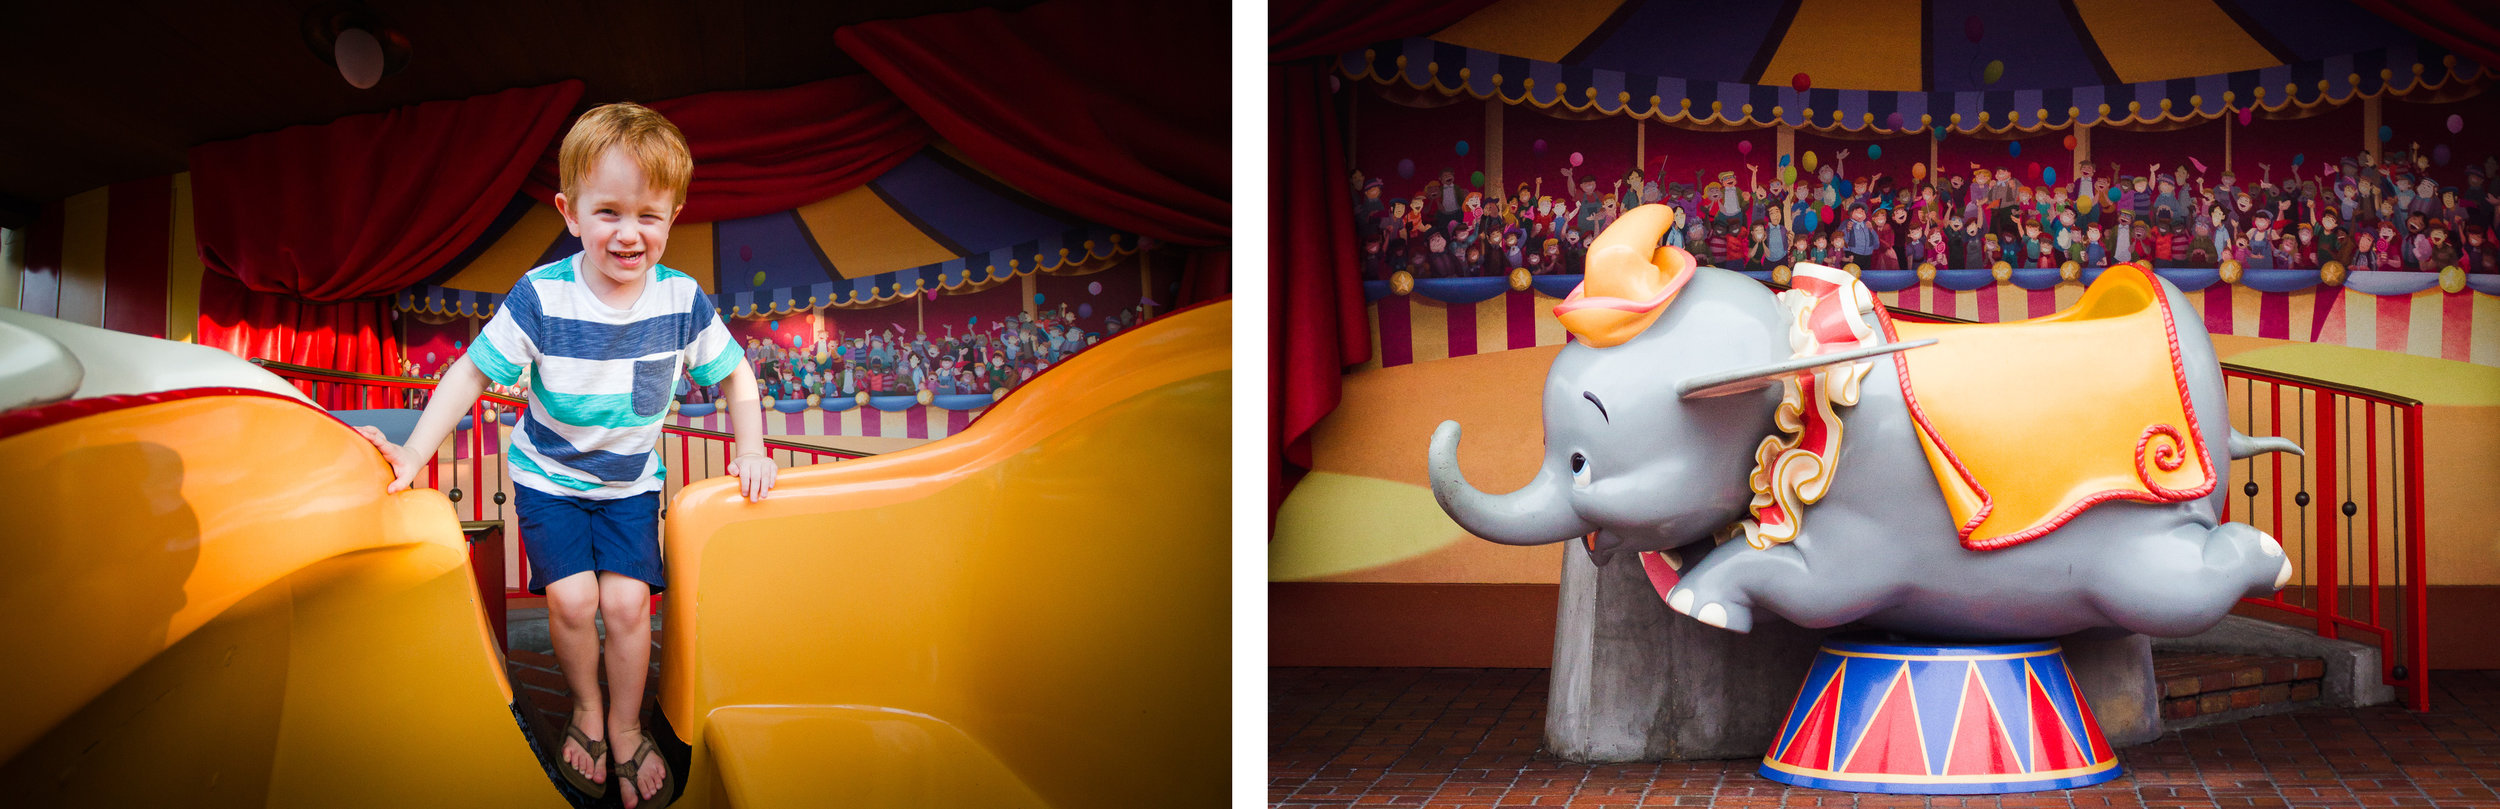 dumbo the flying elephant / disney attractions / disney vacation photographer